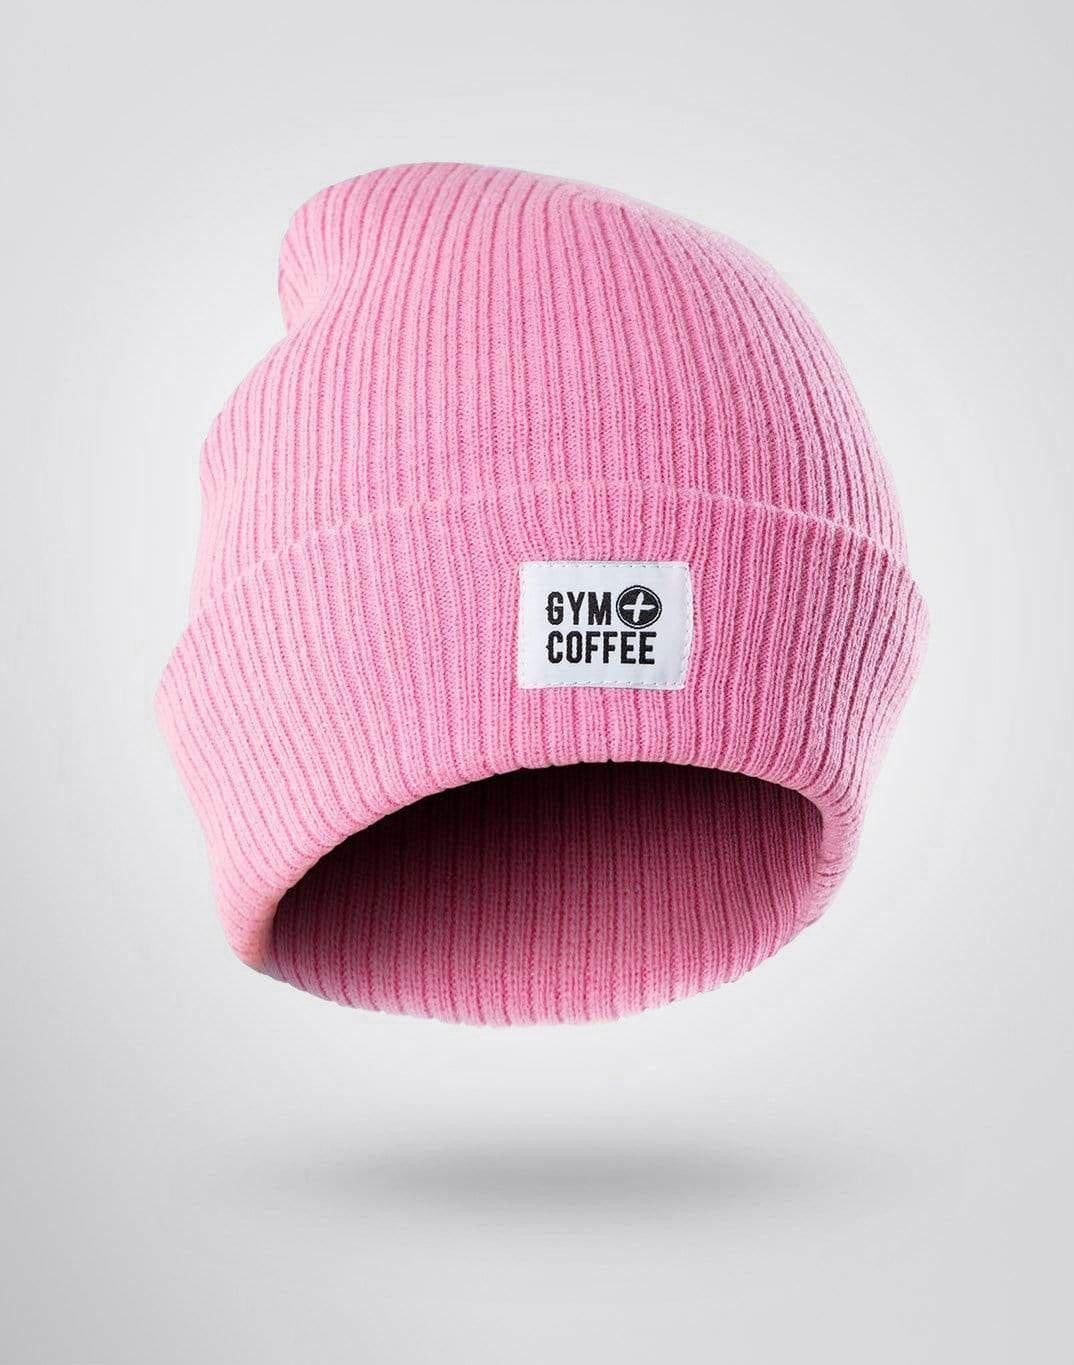 Gym+Coffe Beanie - Pink